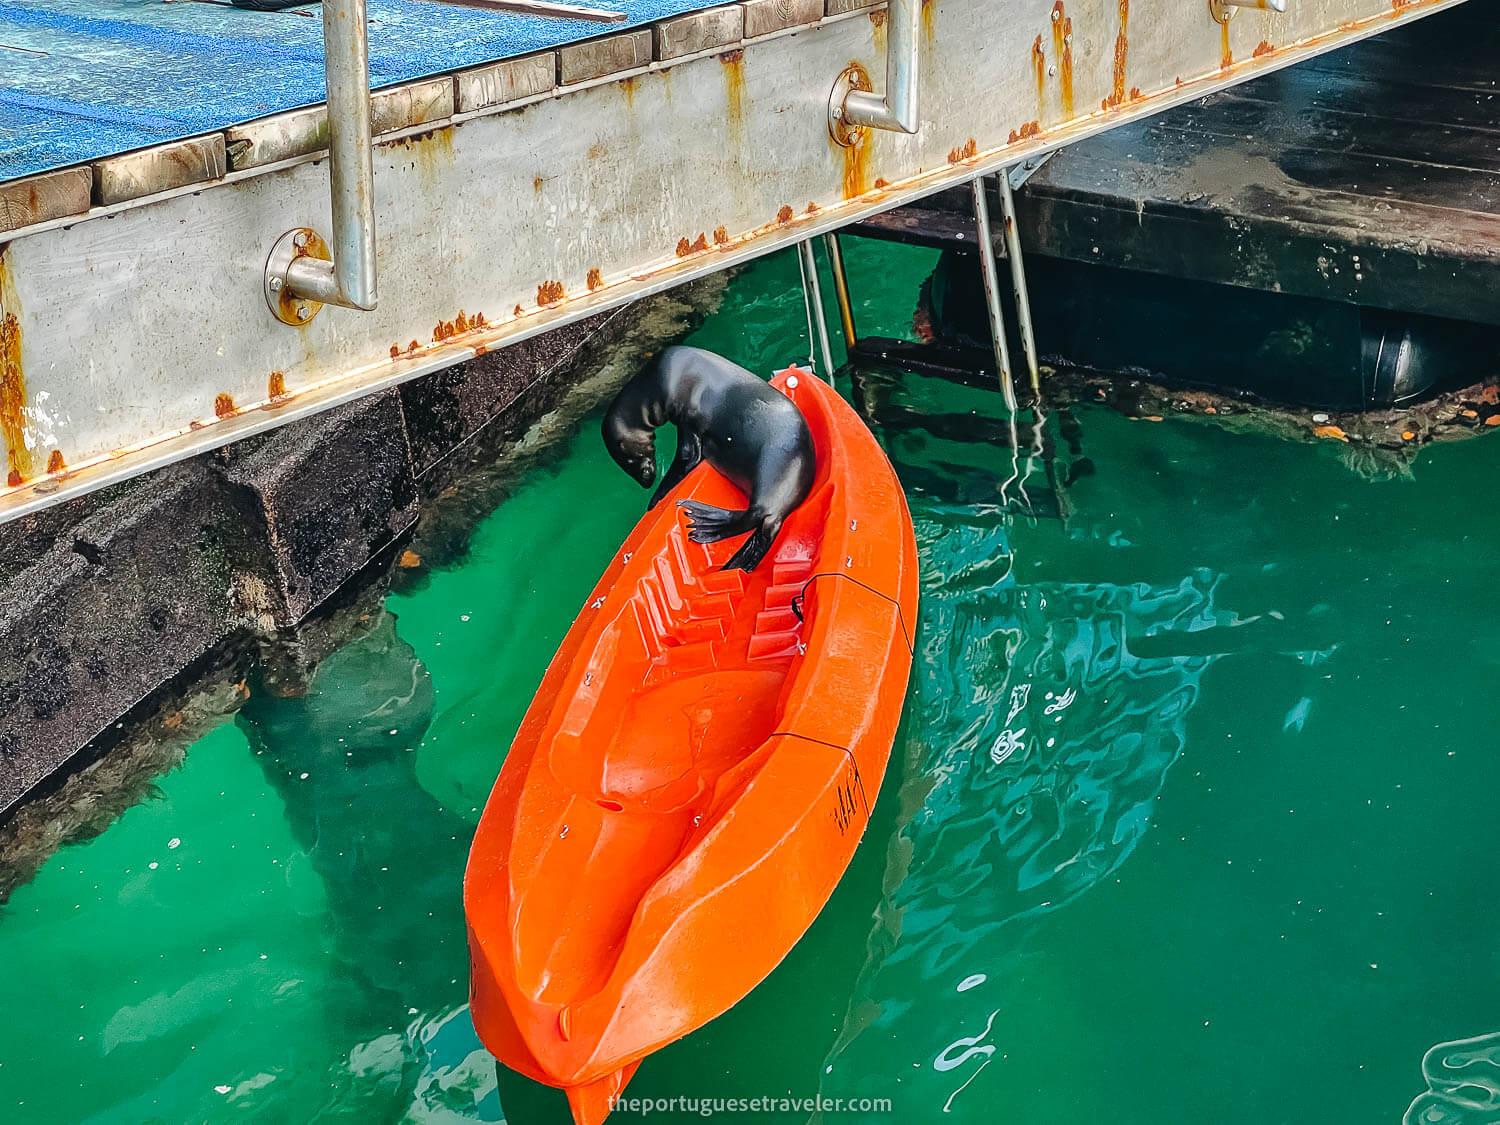 A sea lion kayaking at the Puerto Baquerizo port